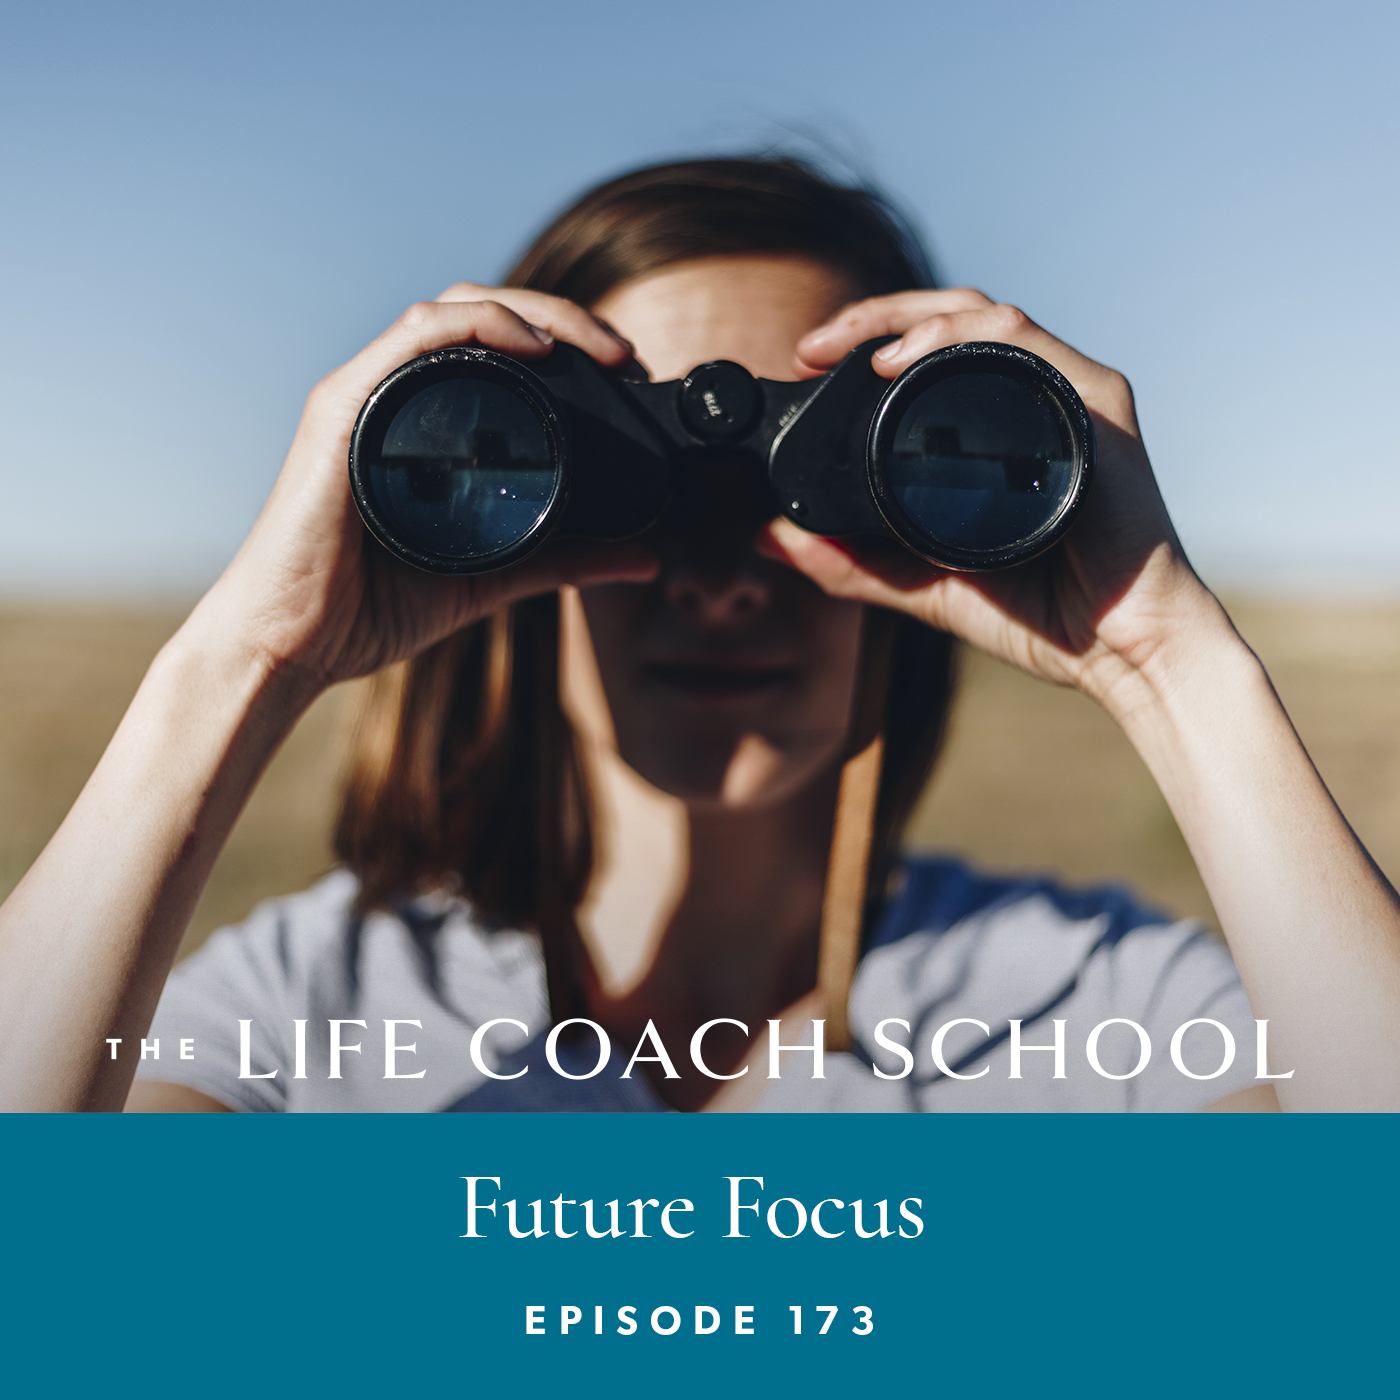 The Life Coach School Podcast with Brooke Castillo | Episode 173 | Future Focus